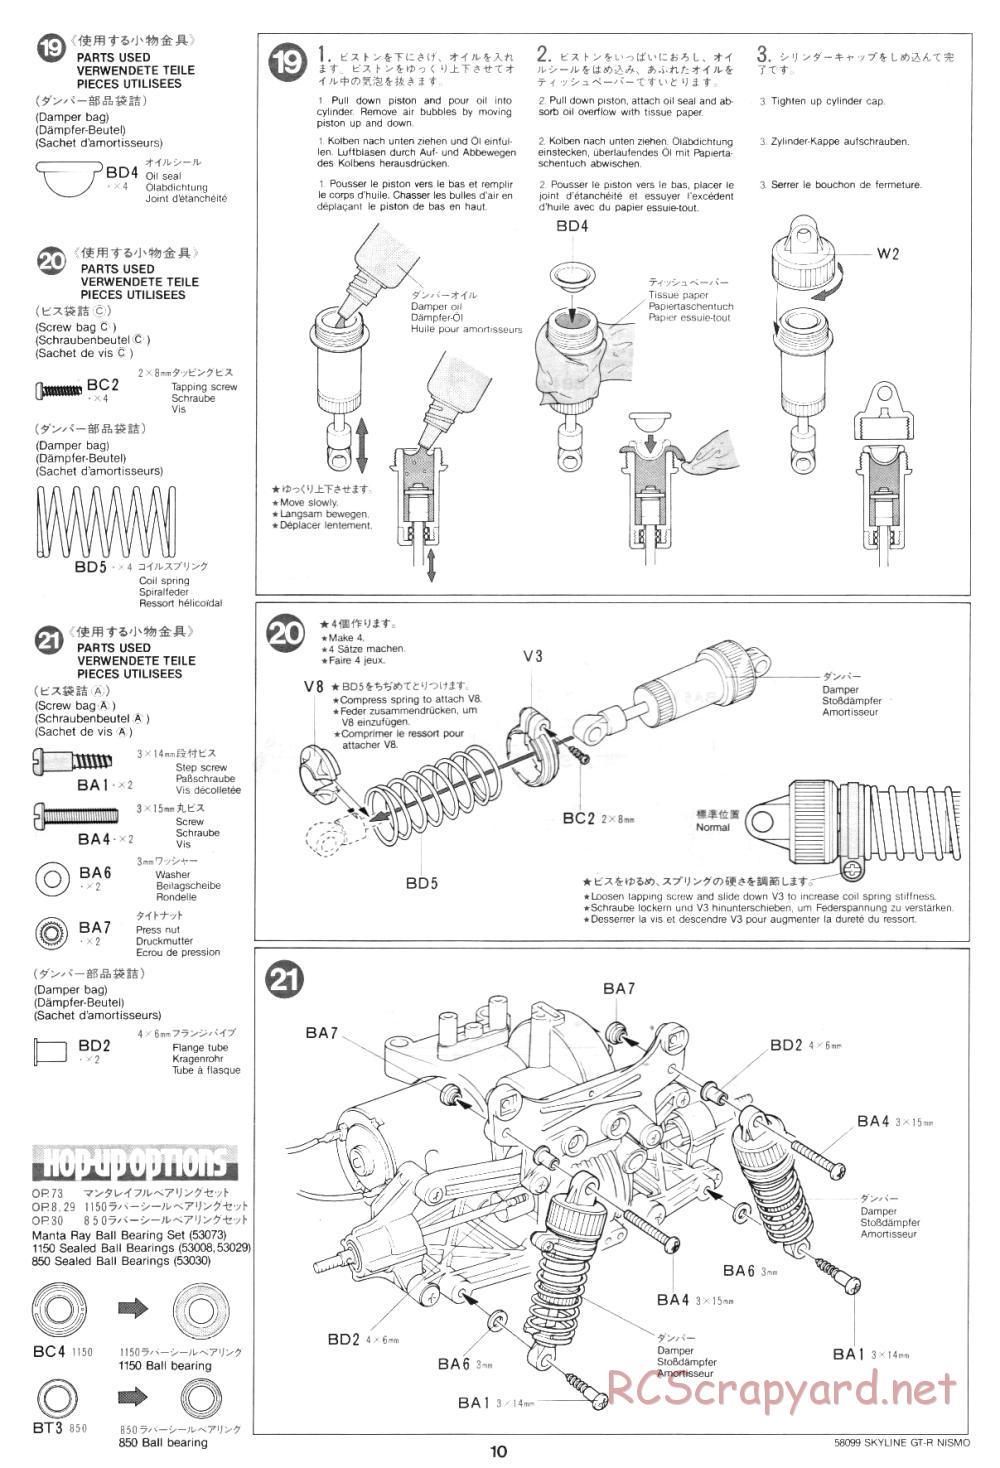 Tamiya - Nissan Skyline GT-R Nismo - 58099 - Manual - Page 10